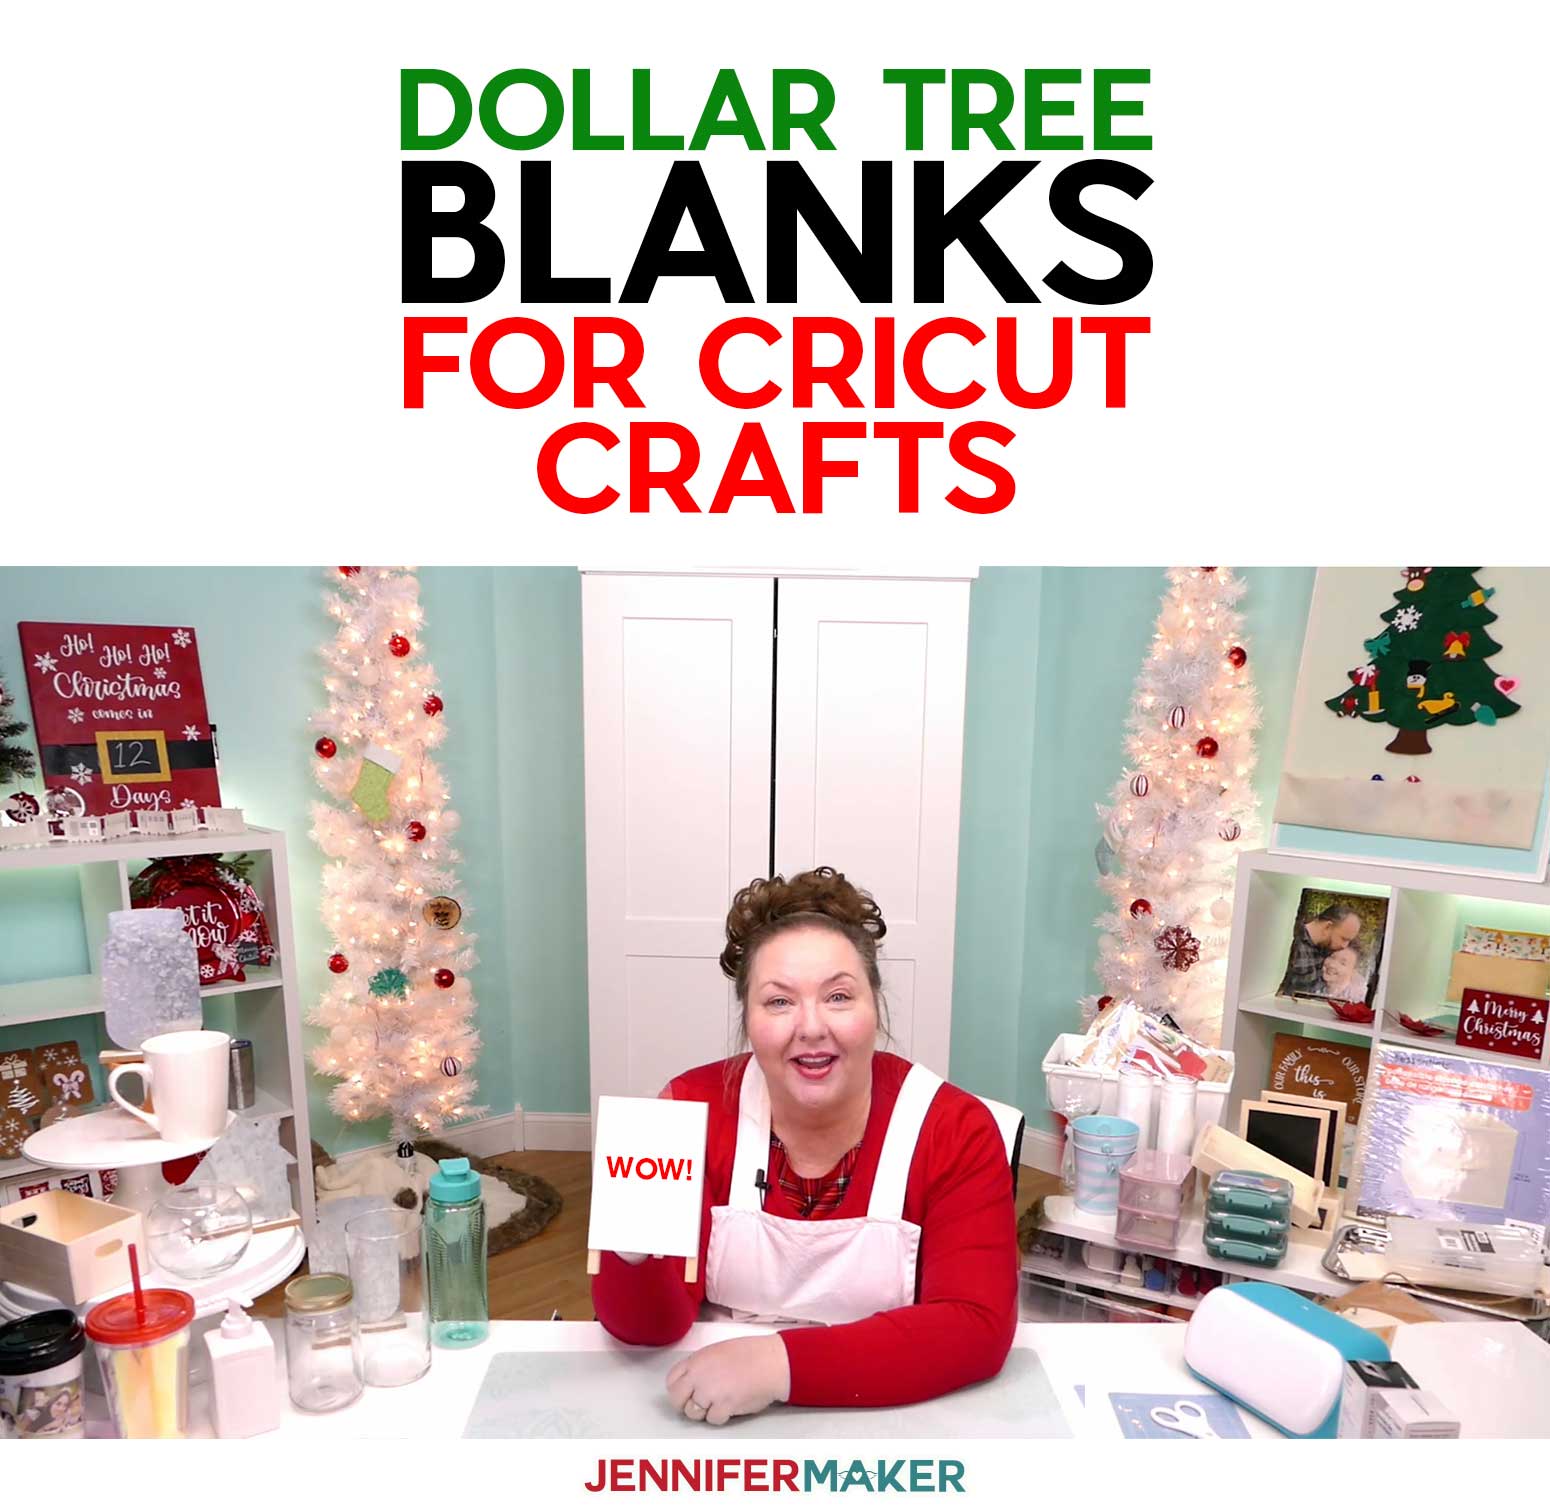 Dollar Tree Blanks for Cricut Crafts